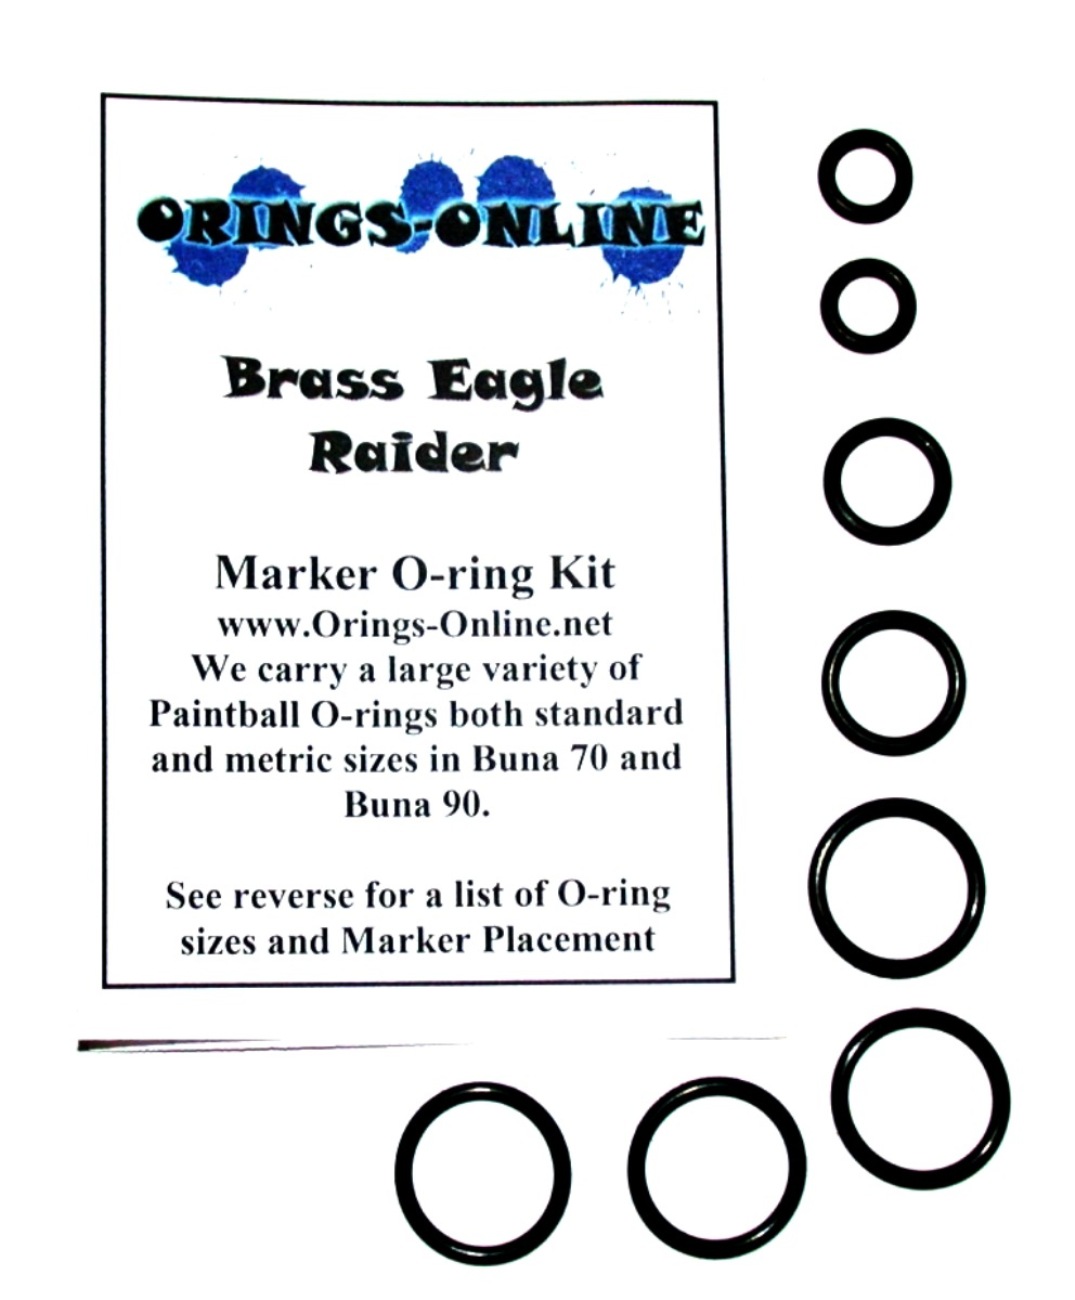 Brass Eagle Raider Marker O-ring Kit